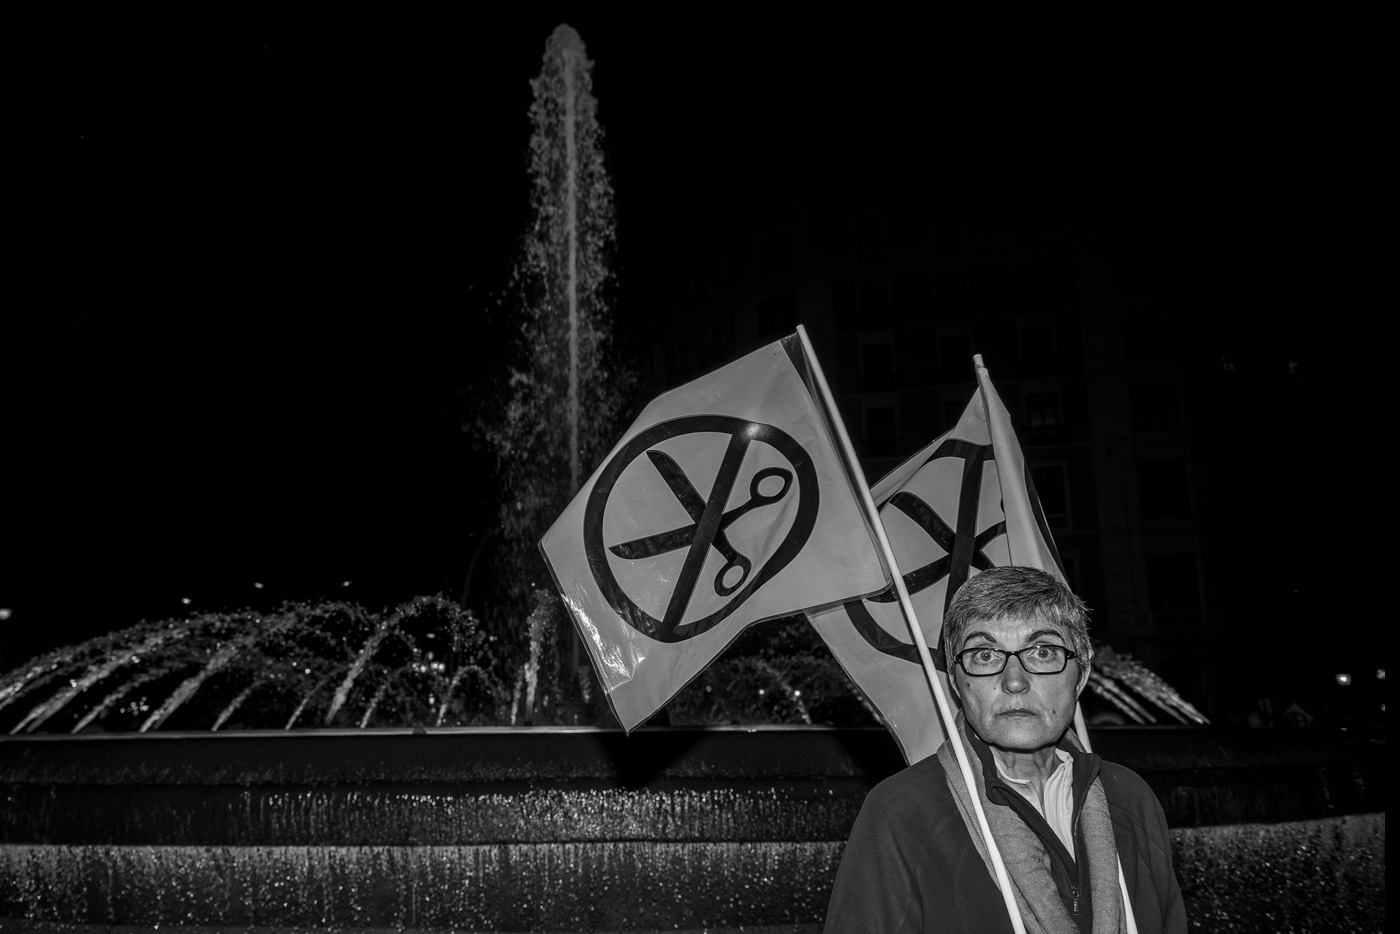 Photography  journalism   14n huelga barcelona riot black and white